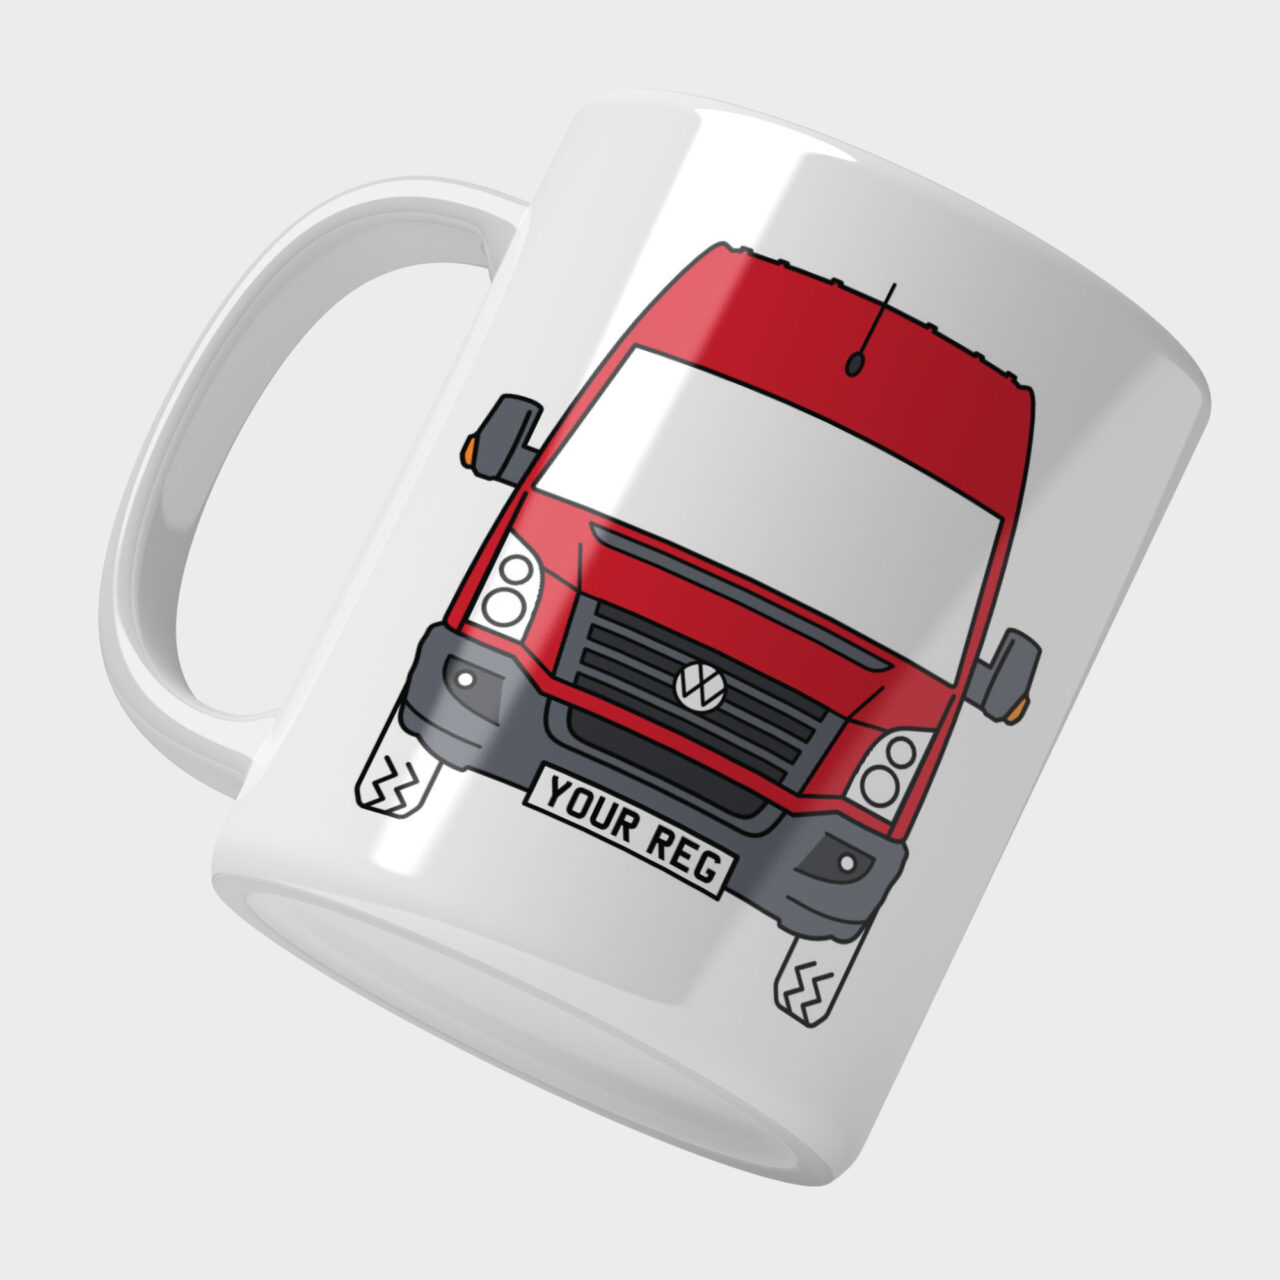 VW Volkswagen Crafter MK1 Personalised Campervan Mug Cup Gift